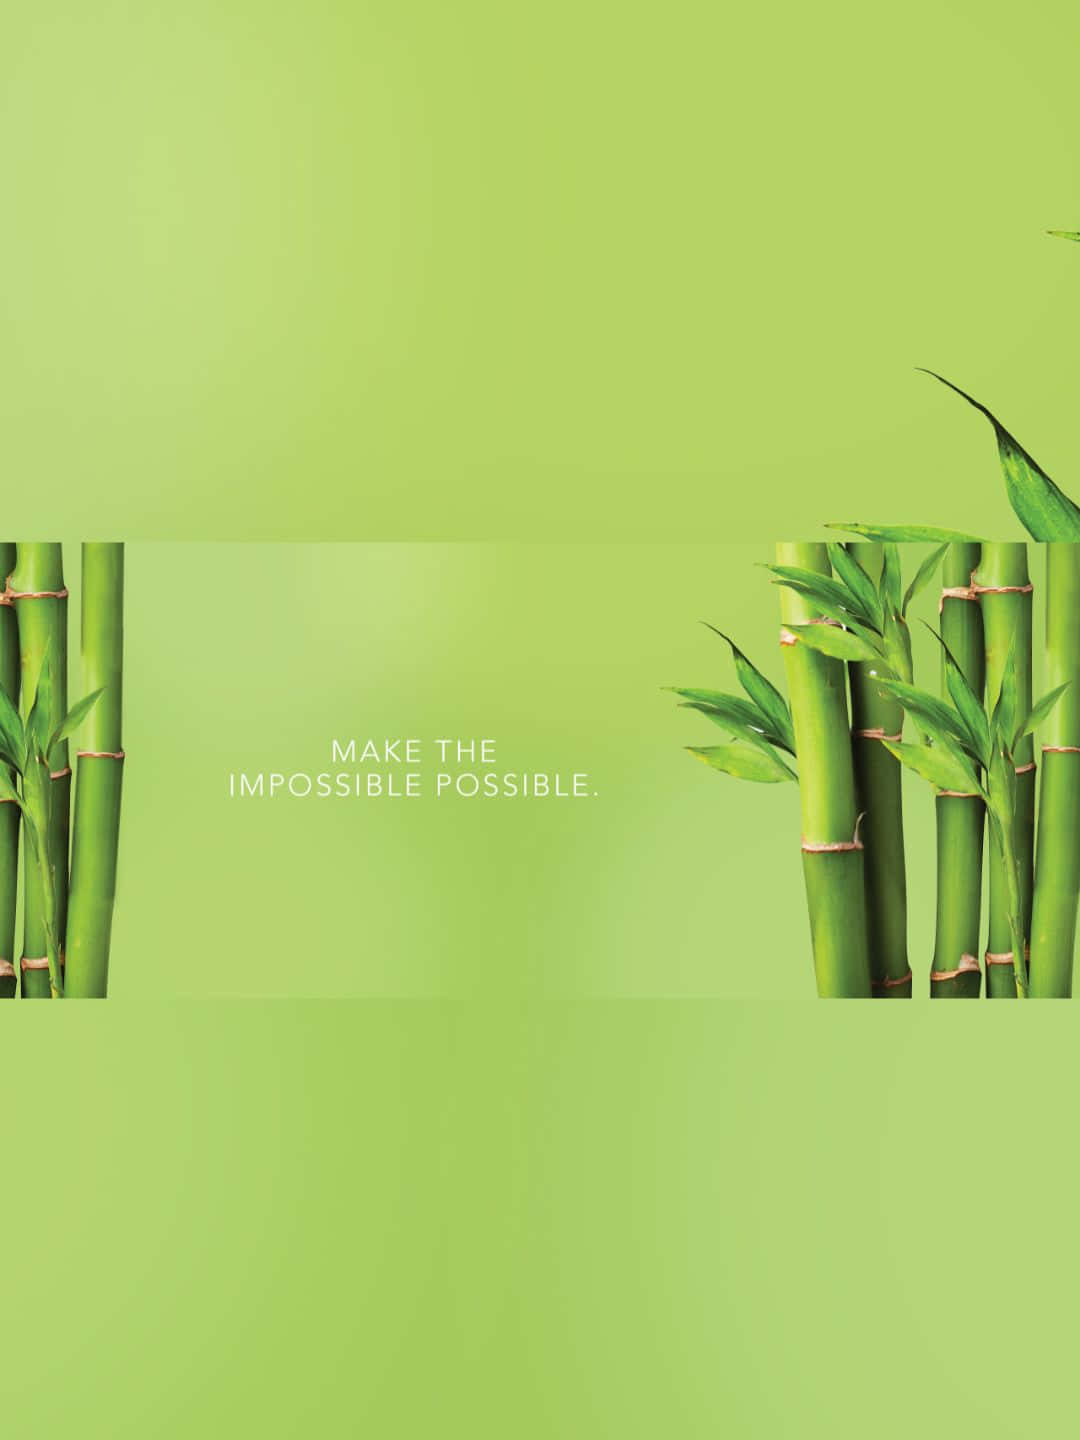 Aesthetic 1440p Bamboo Background